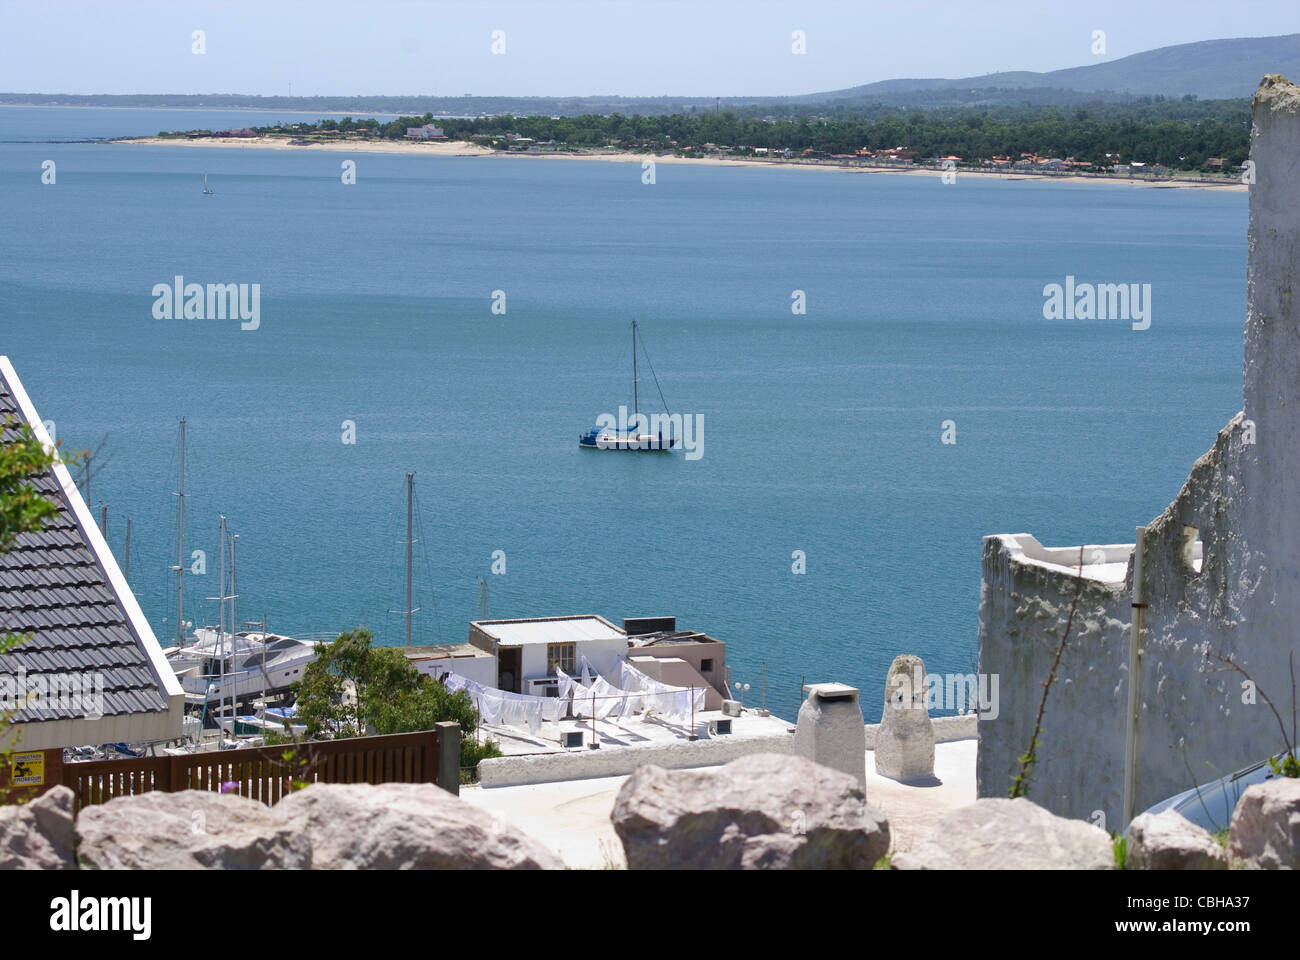 Bay of dreams at international tourism spot with sailing boat. Piriapolis, Maldonado, Uruguay.  Stock Photo